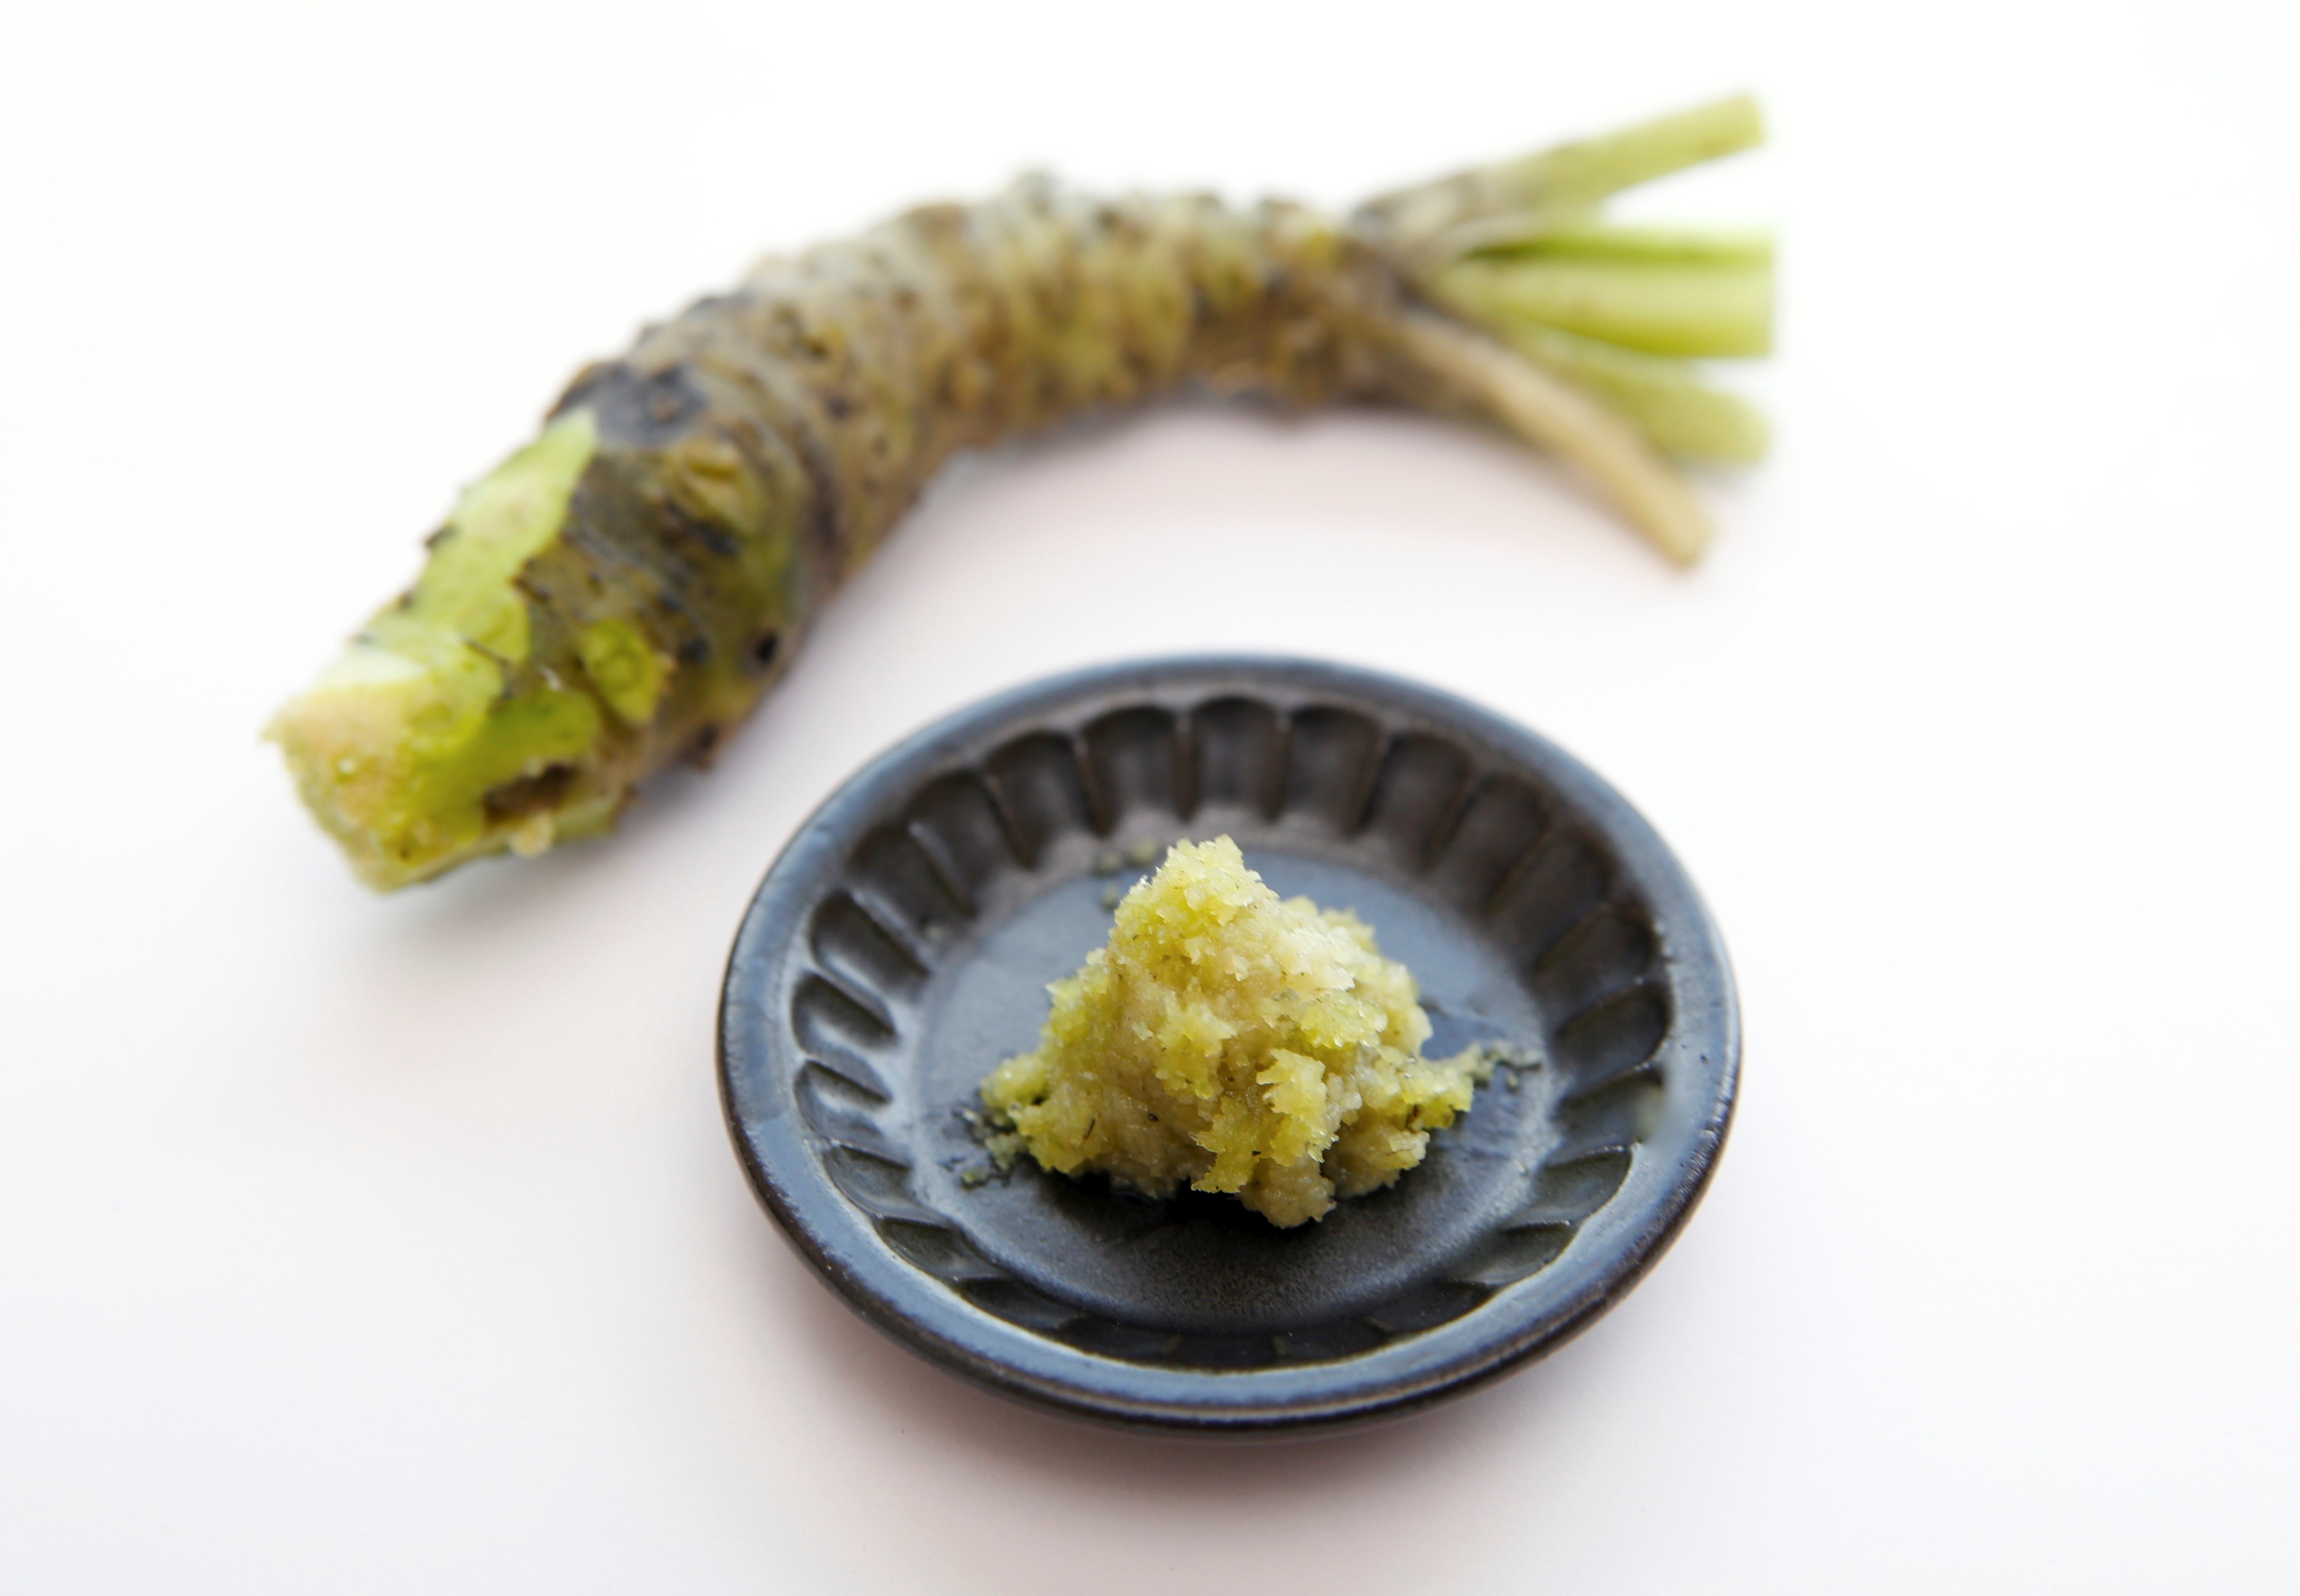 La radice di wasabi grattugiata